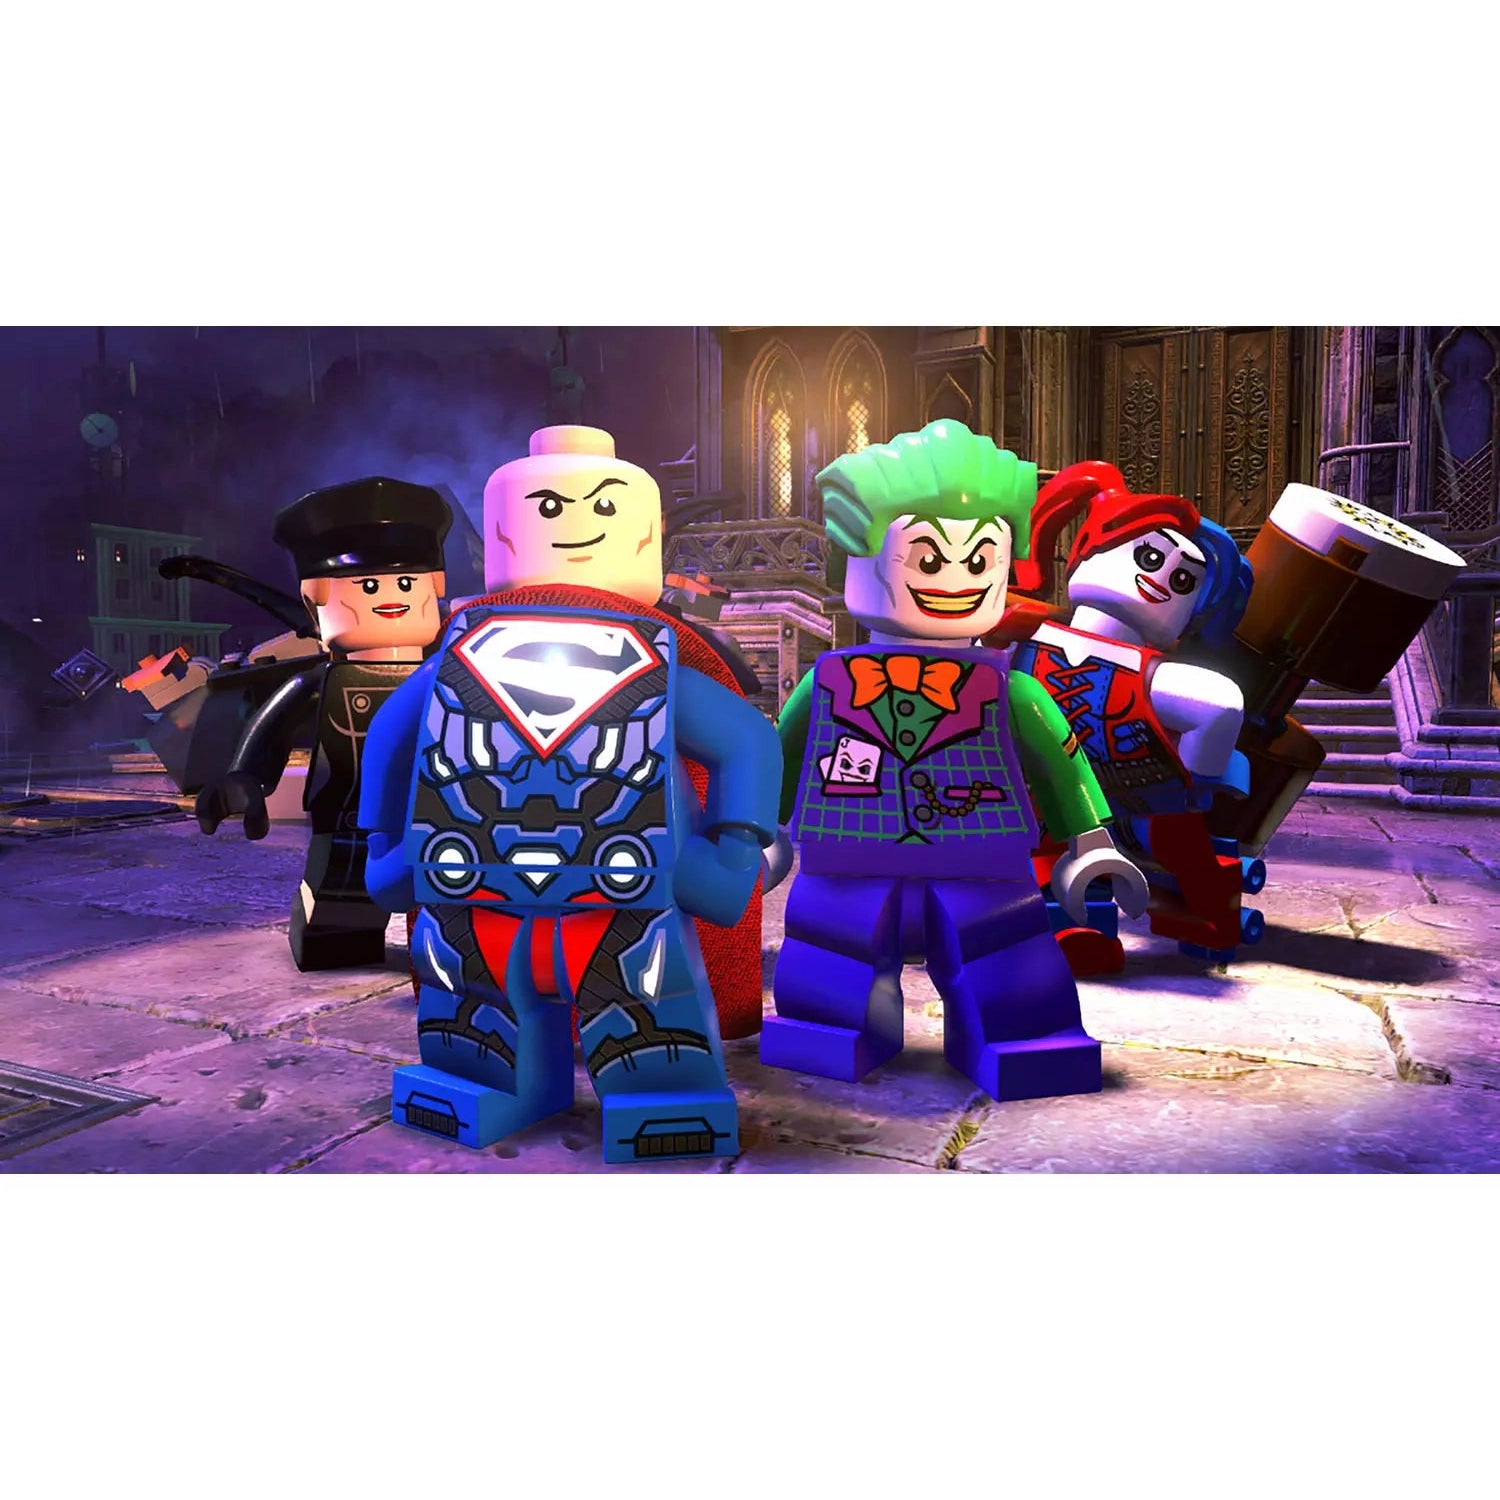 Lego DC Super-Villains (Nintendo Switch)